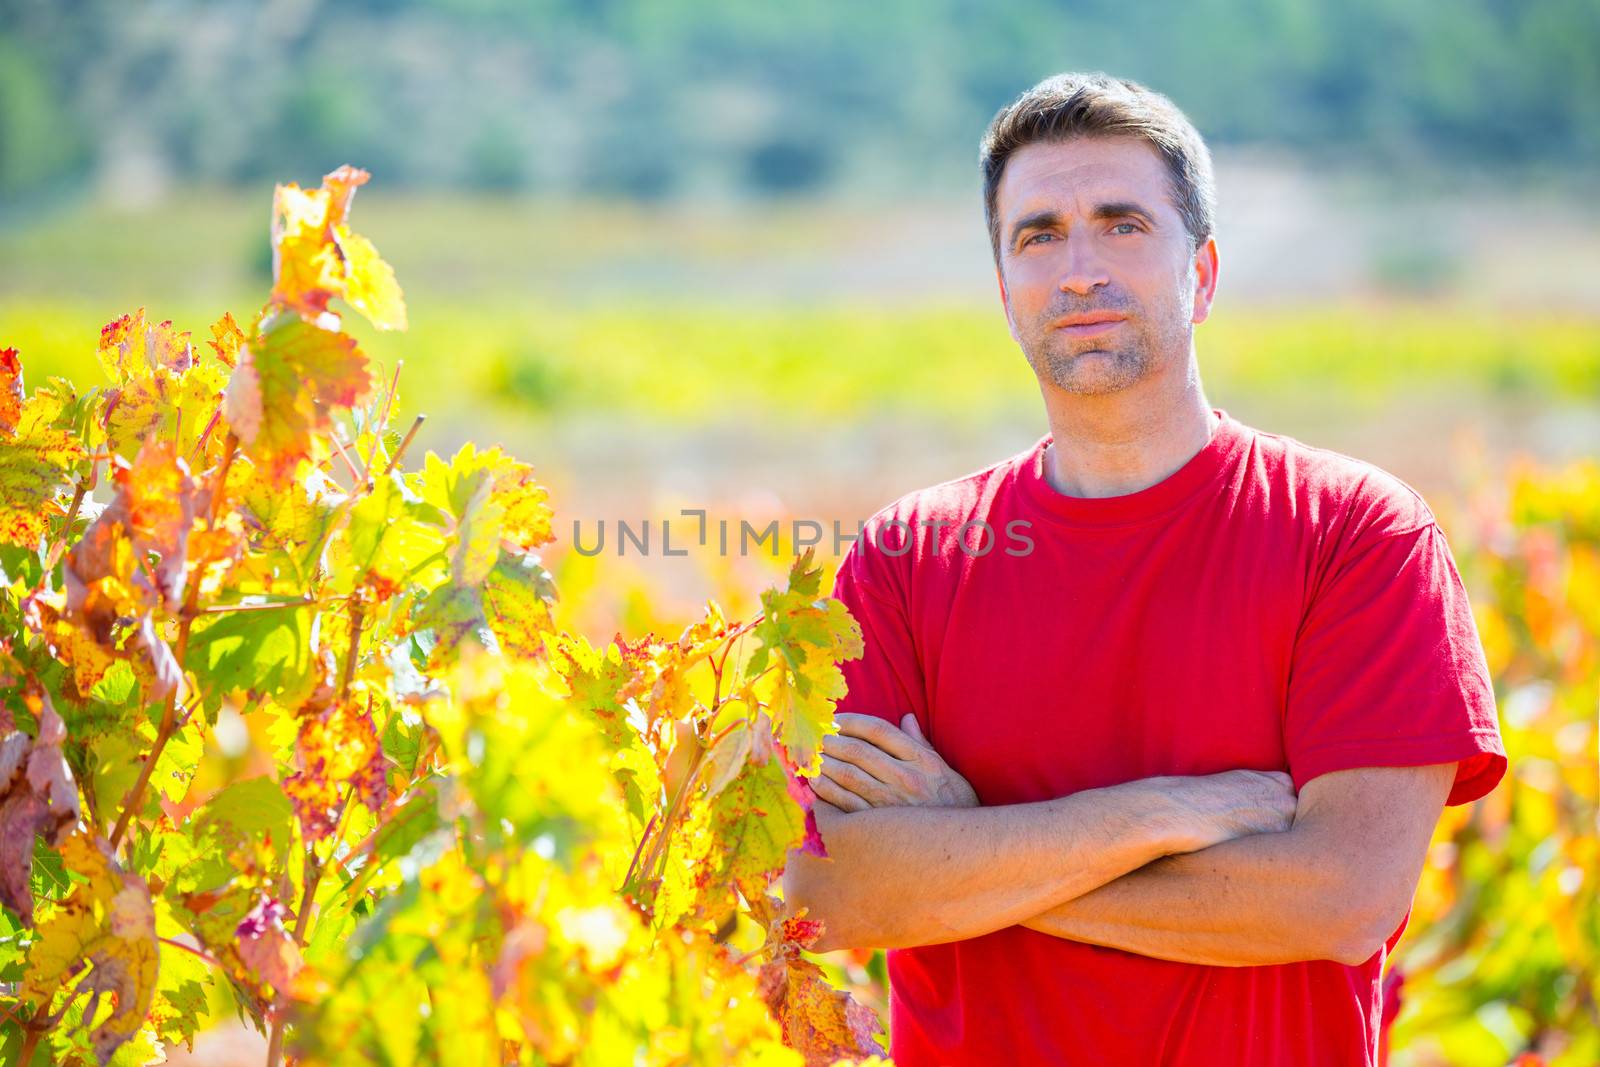 Harvester winemaker farmer proud of his vineyard by lunamarina